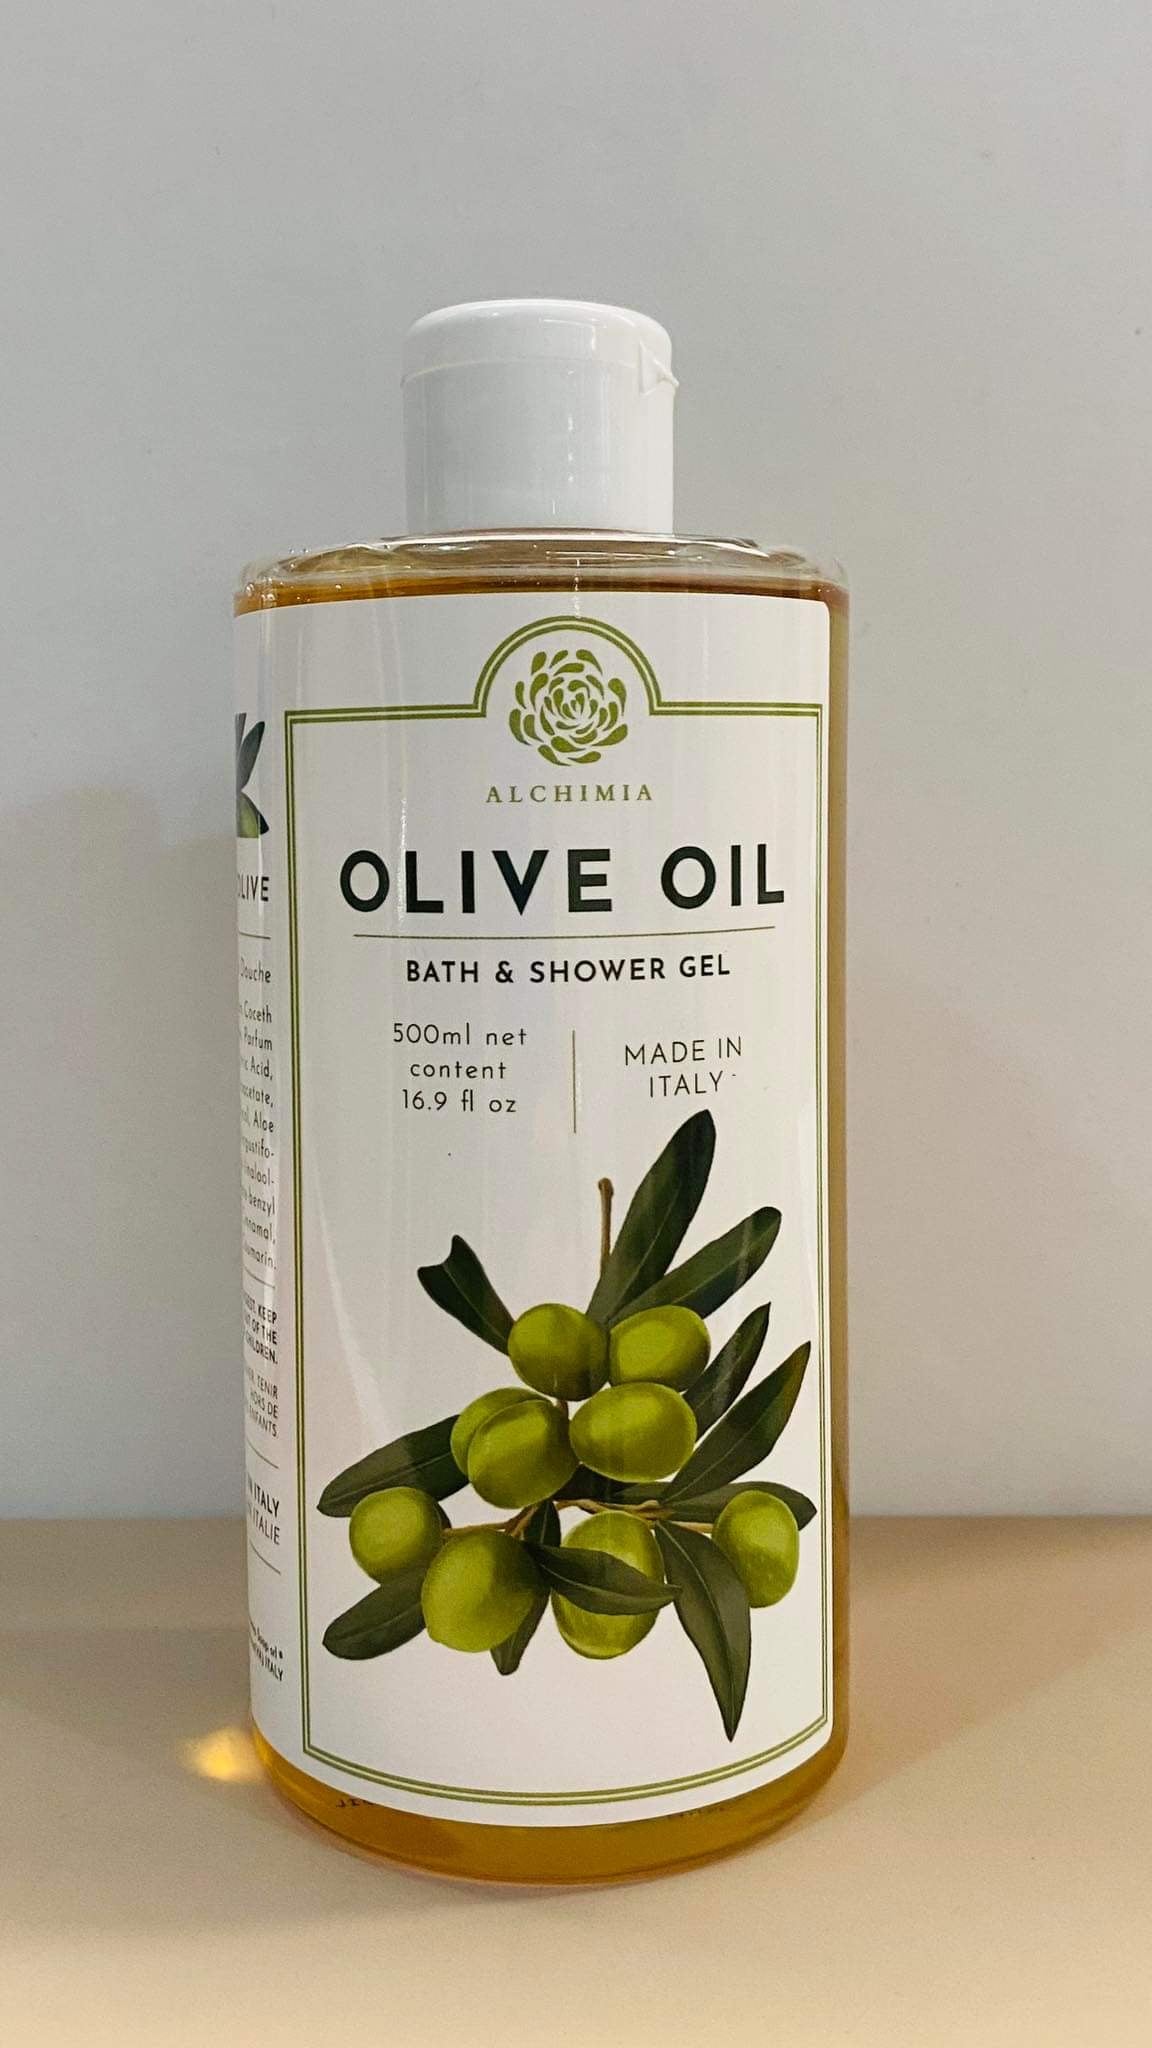 Alchimia Olive oil